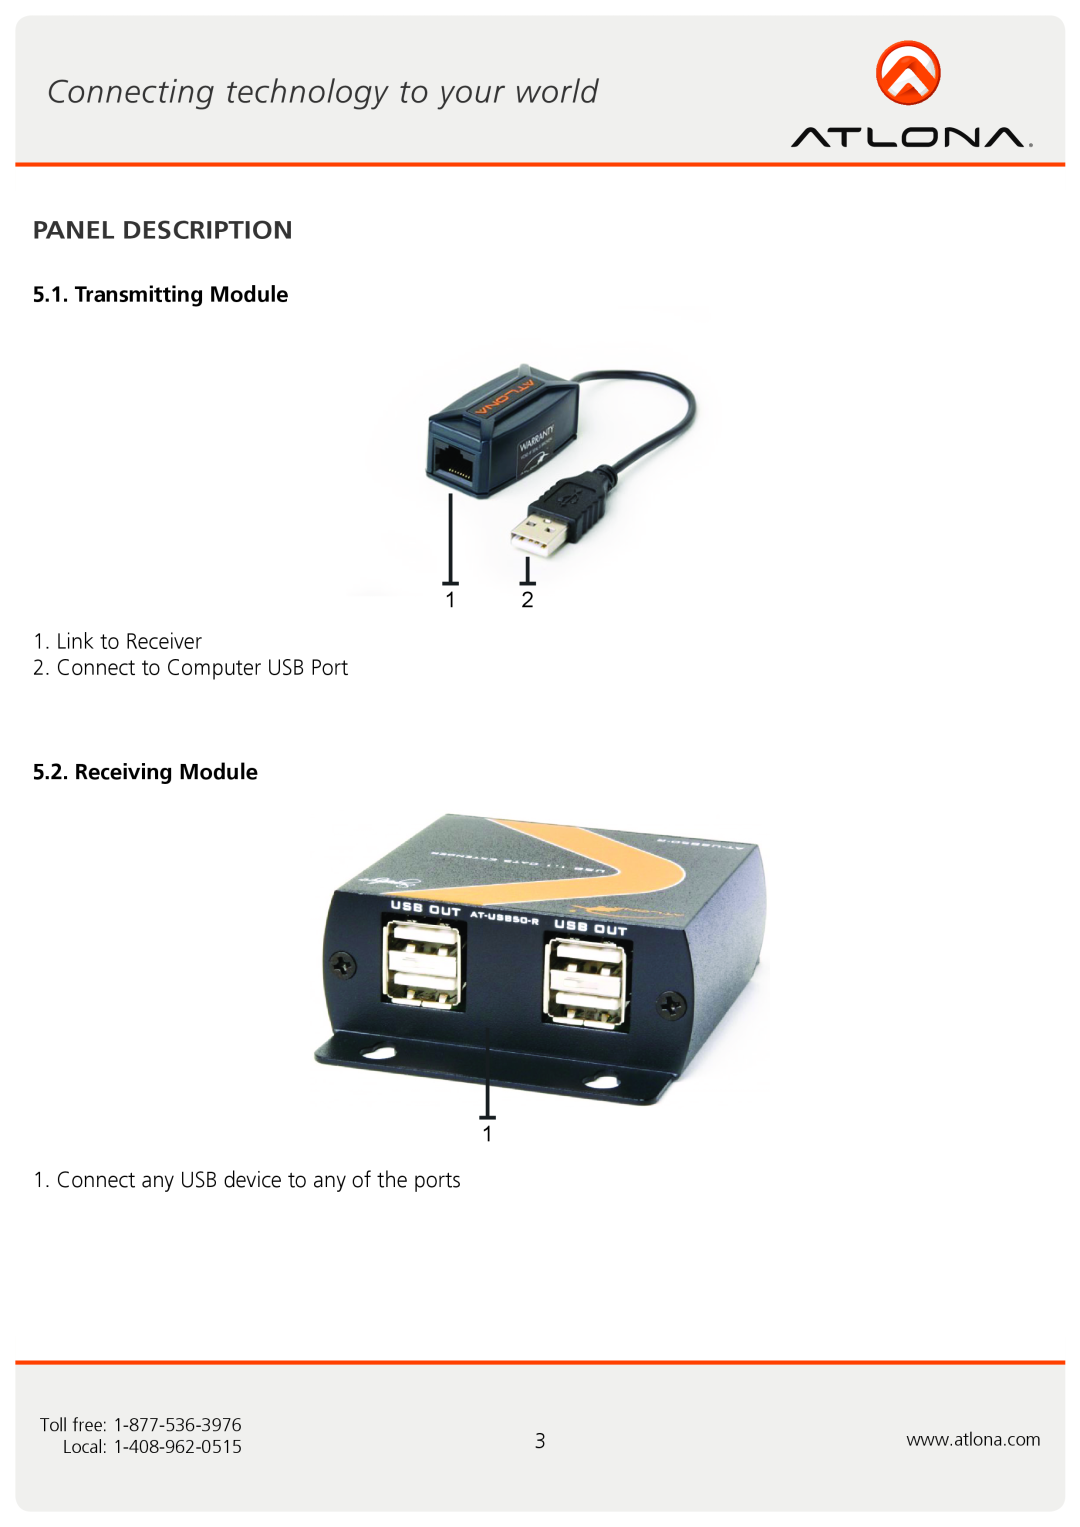 Atlona AT-USB50-SR user manual Panel Description, Transmitting Module, Receiving Module, Toll free, Local 